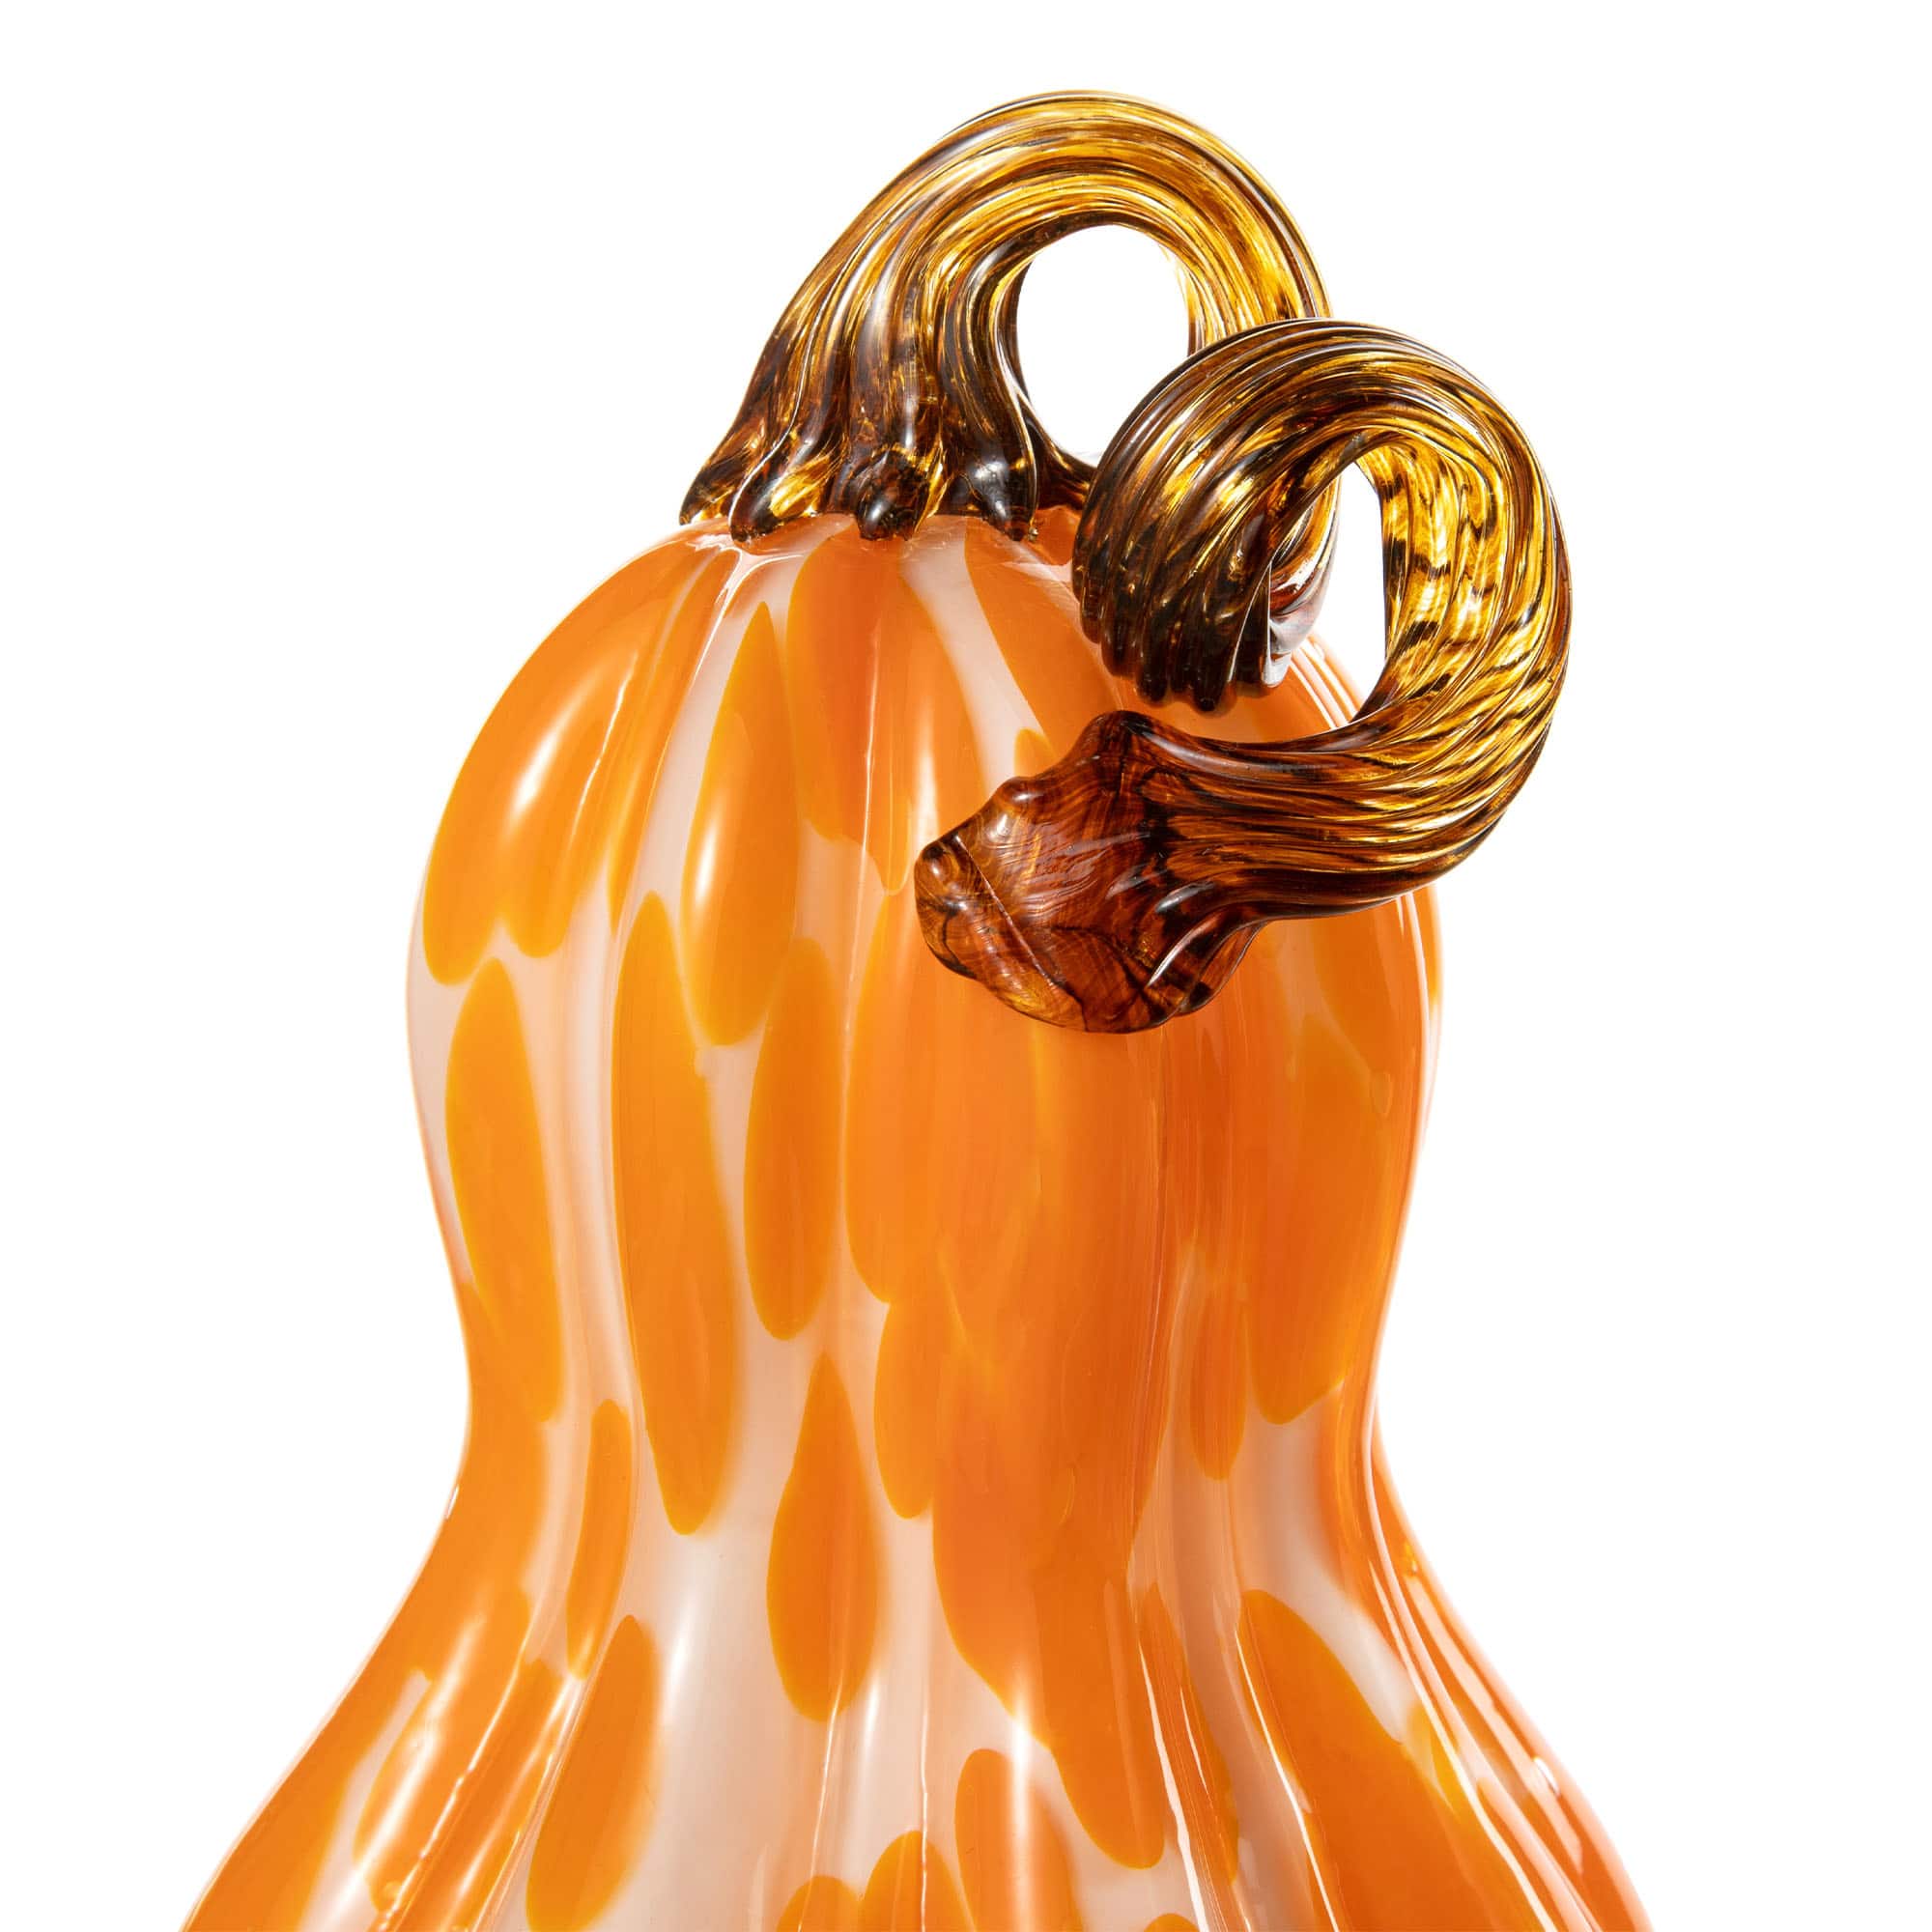 Glitzhome&#xAE; Orange Glass Pumpkin &#x26; Gourd Set